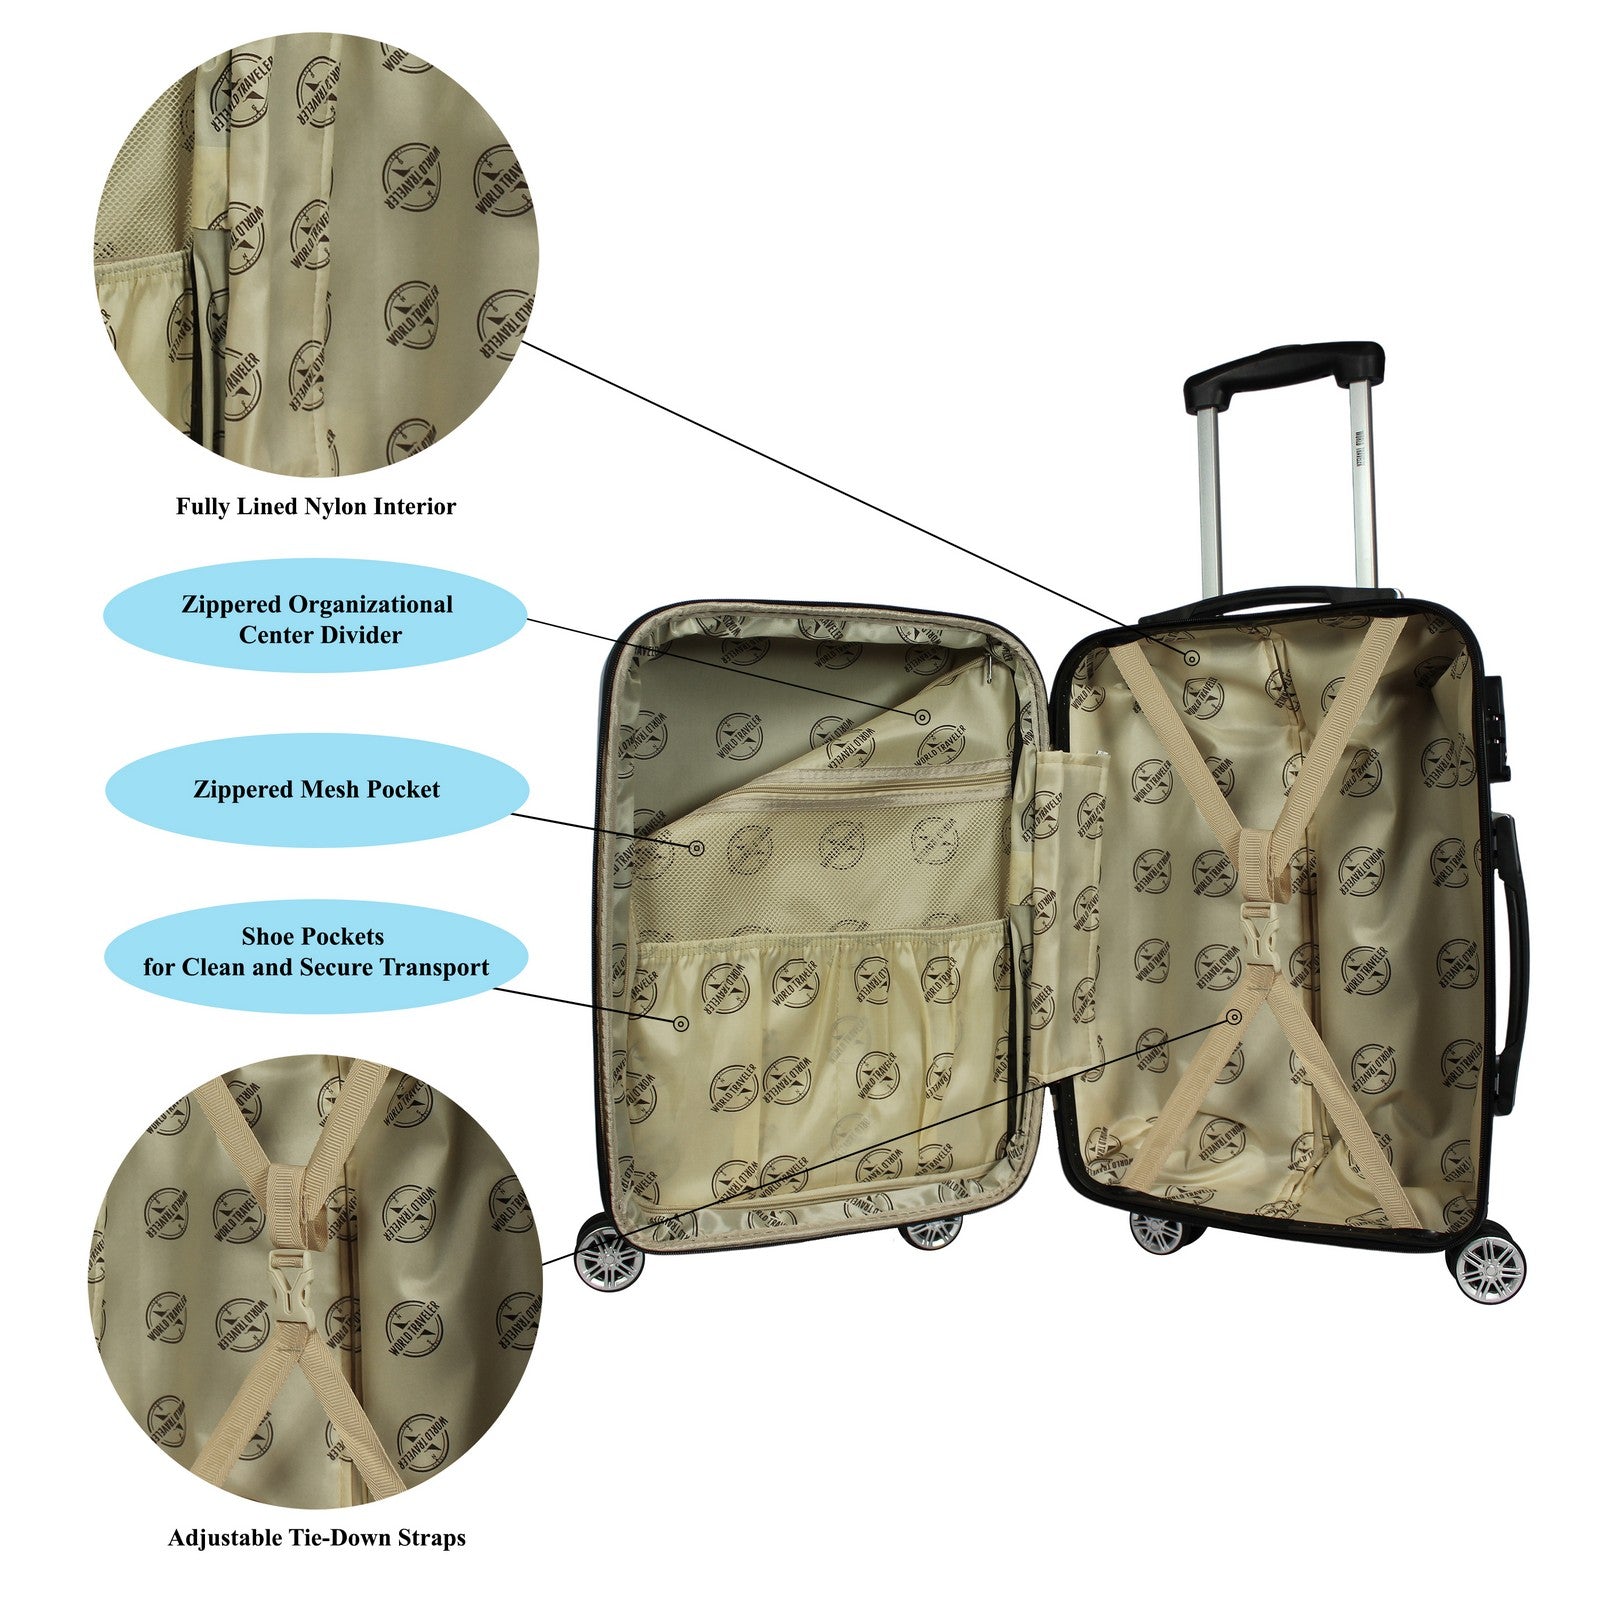 World Traveler Butterfly 24" Hardside Expandable Spinner Suitcase